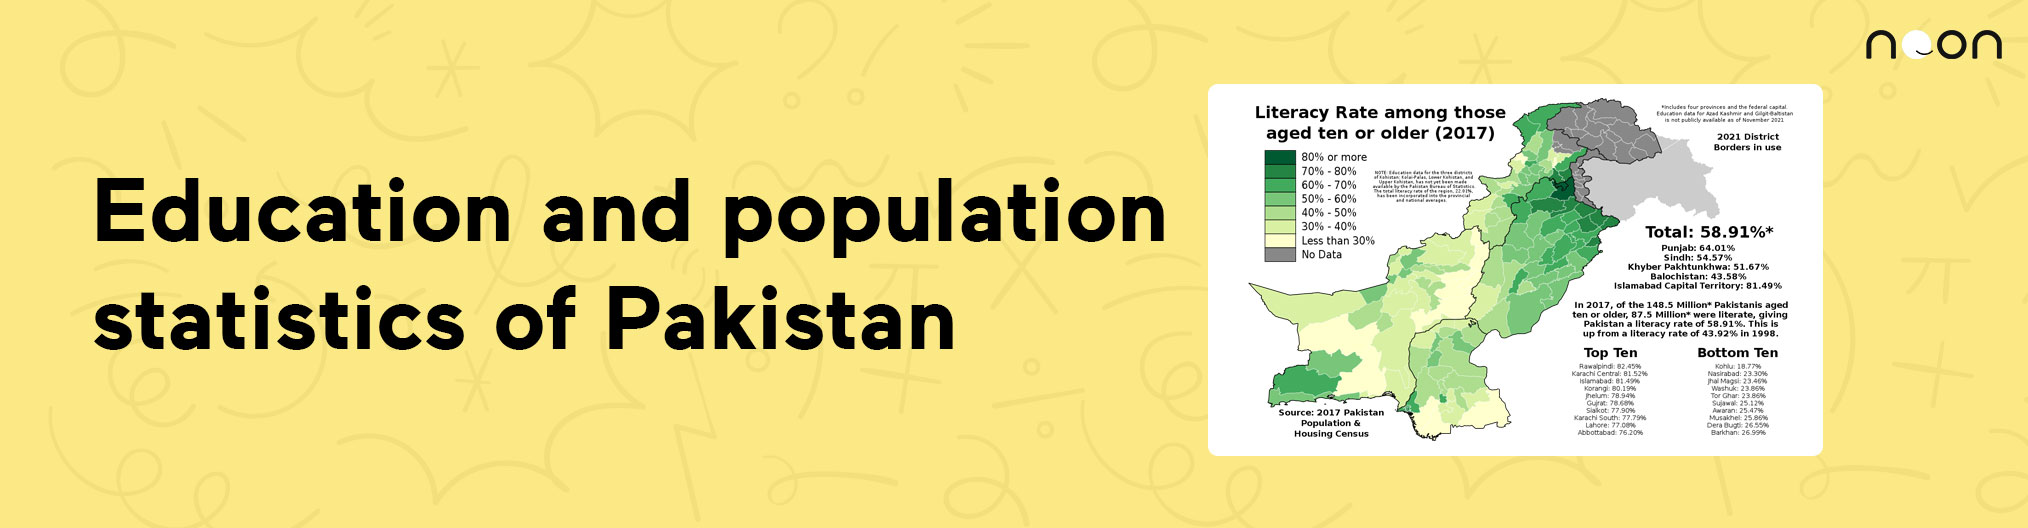 Education and population statistics of Pakistan 